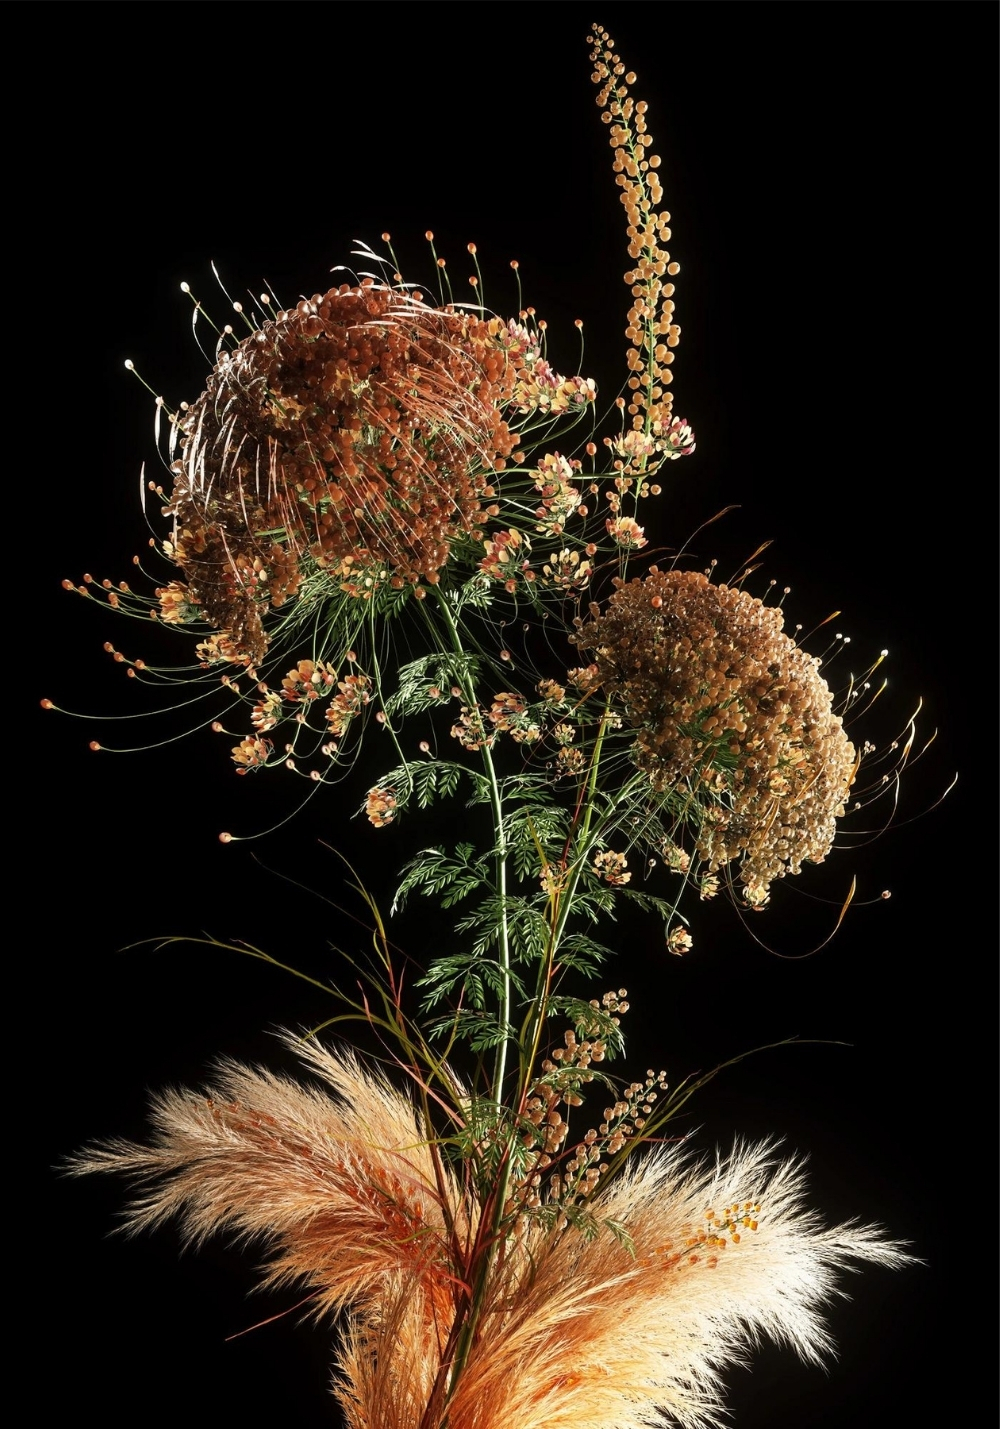 Shy Studio Recreates the Natural World Through a Series of Lifelike Botanicals Digital Art on Thursd